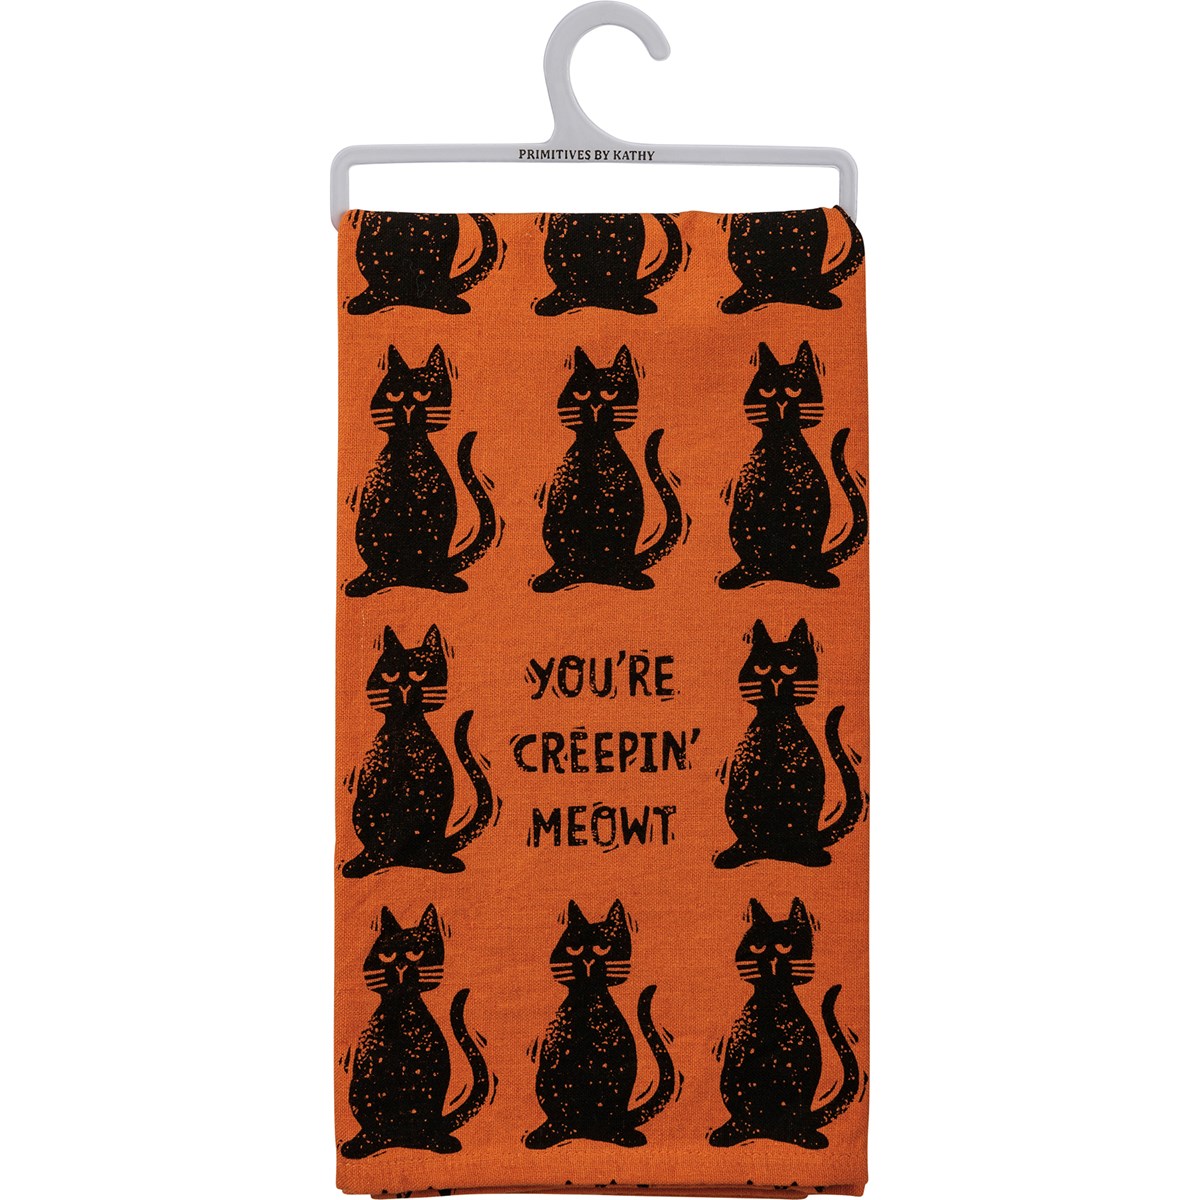 Kitchen Towel - You're Creepin' Meowt - 20" x 26" - Cotton, Linen